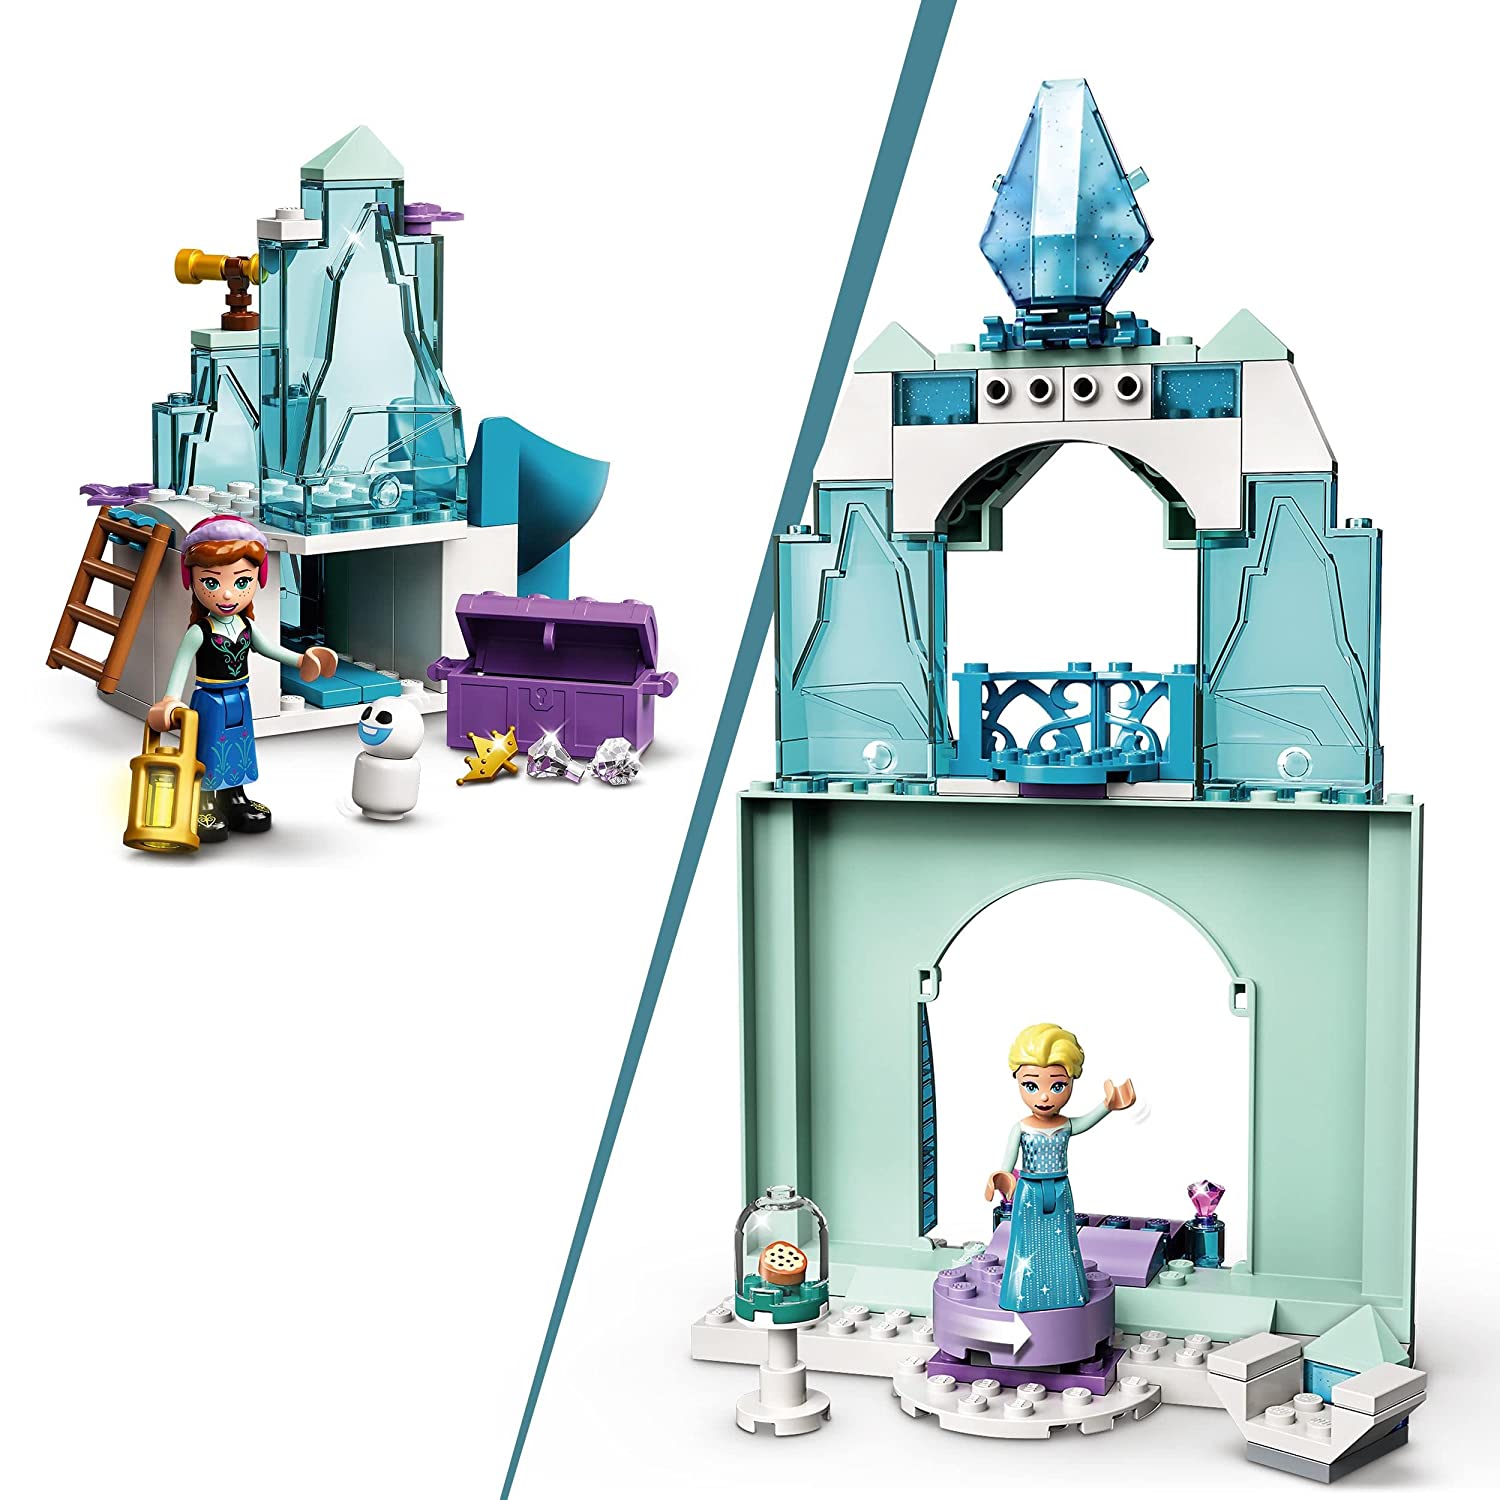 LEGO Disney Anna and Elsa’s Frozen Wonderland Building Kit For Ages 4+